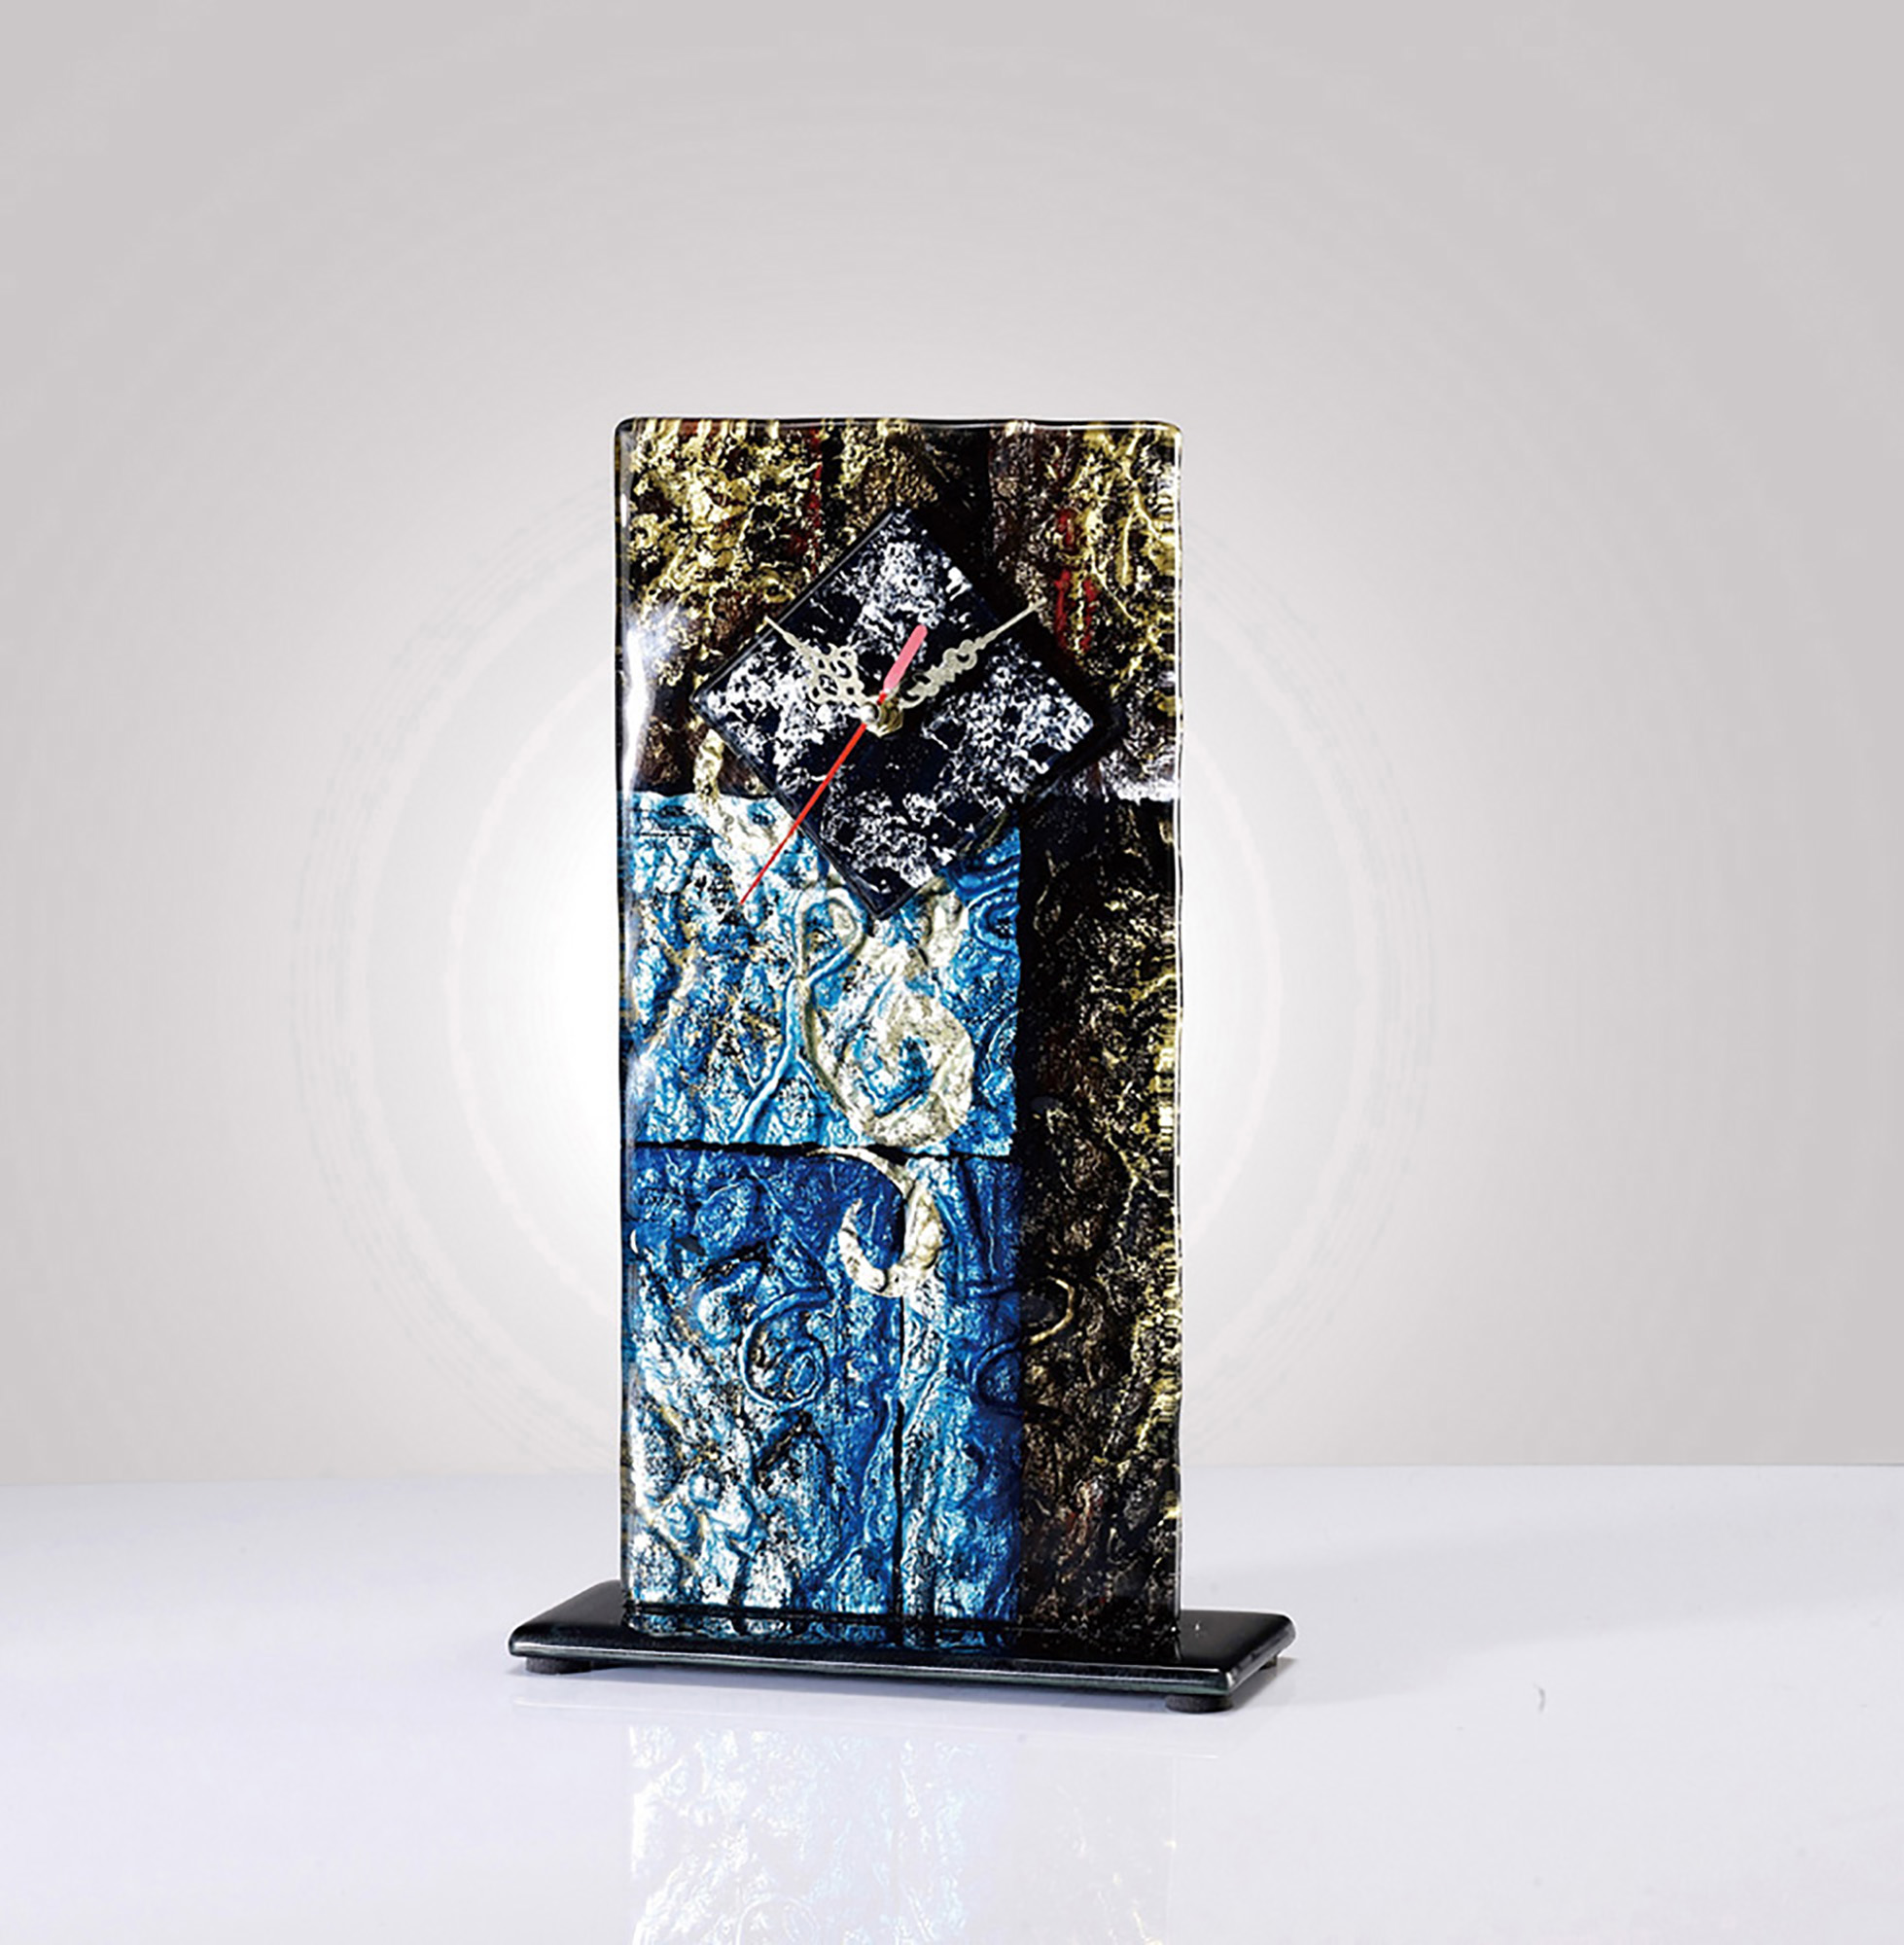 Delphia Glitter Art Glassware Diyas Home Clocks